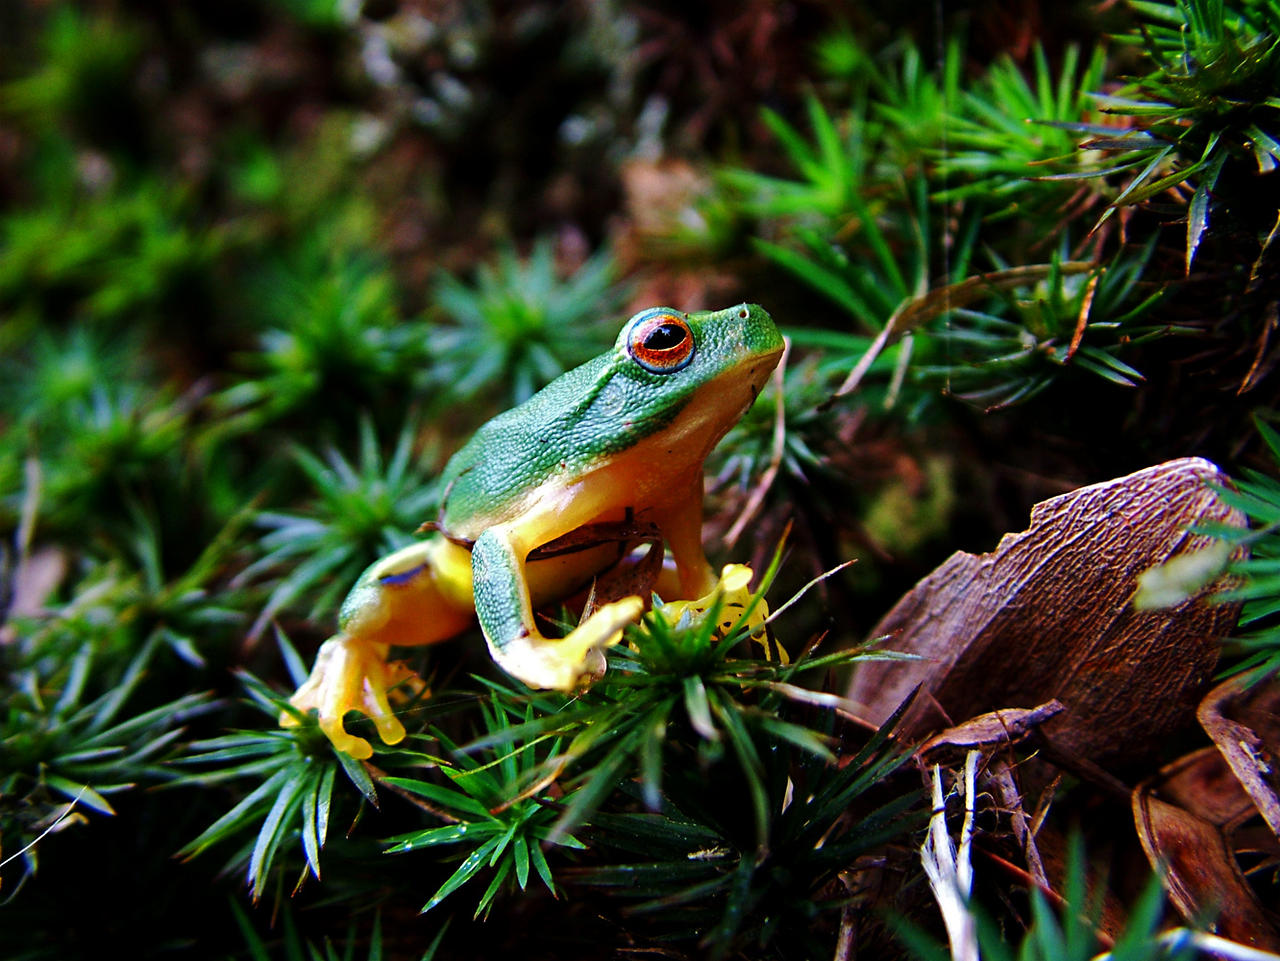 Frog Moss by ozplasmic on DeviantArt